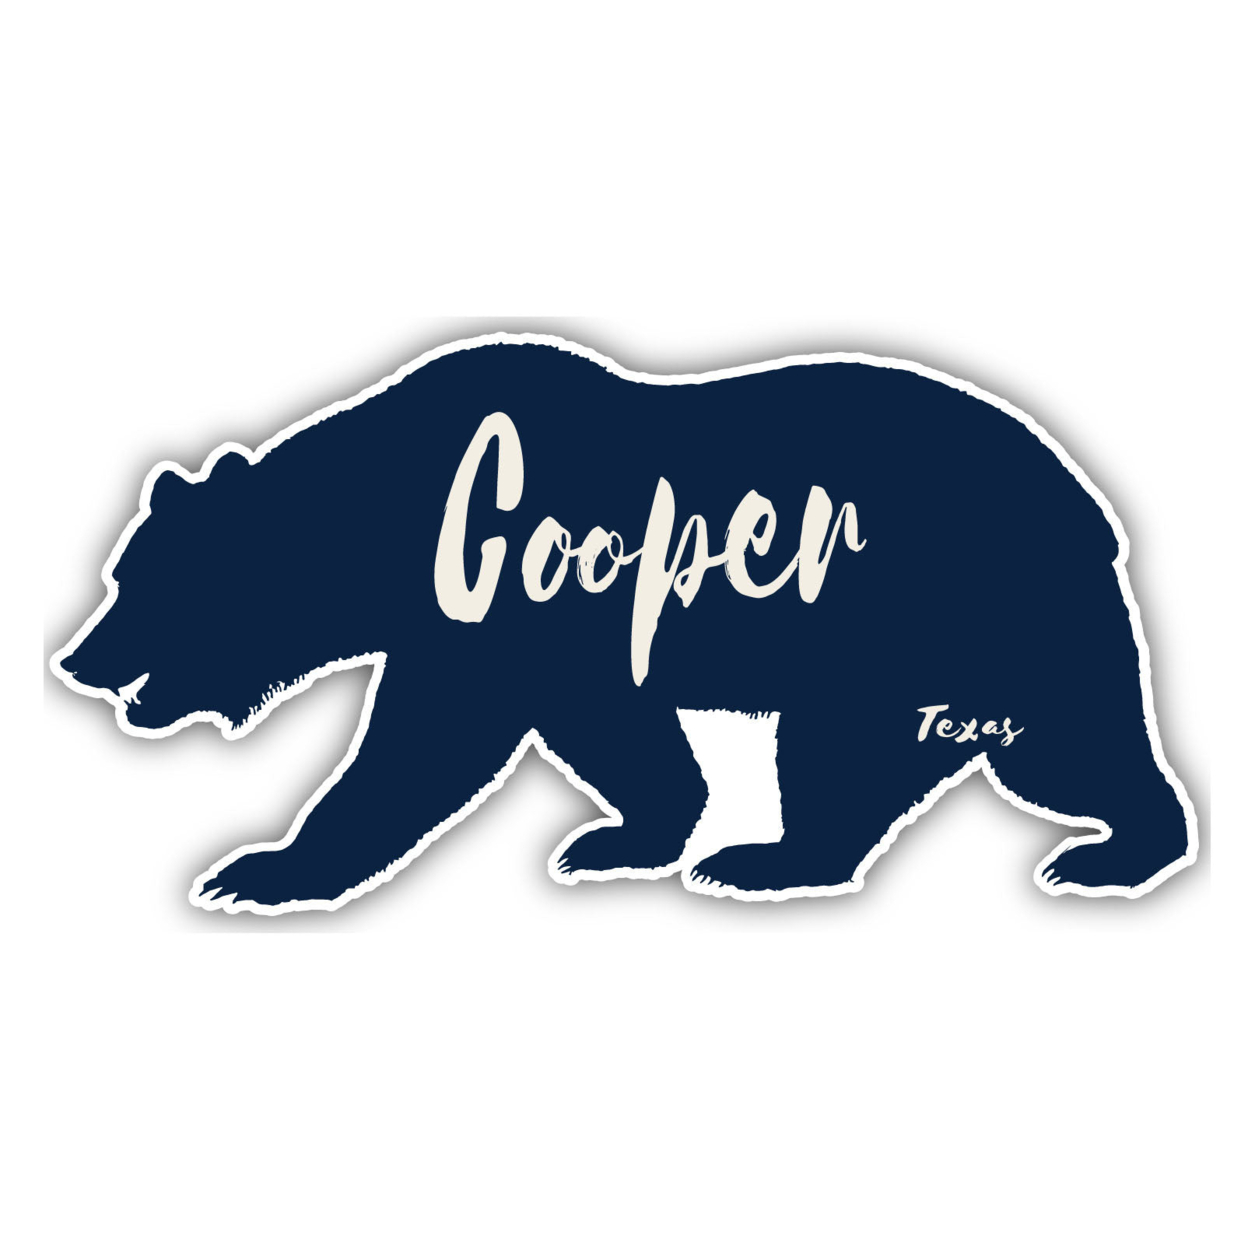 Cooper Texas Souvenir Decorative Stickers (Choose Theme And Size) - Single Unit, 6-Inch, Bear